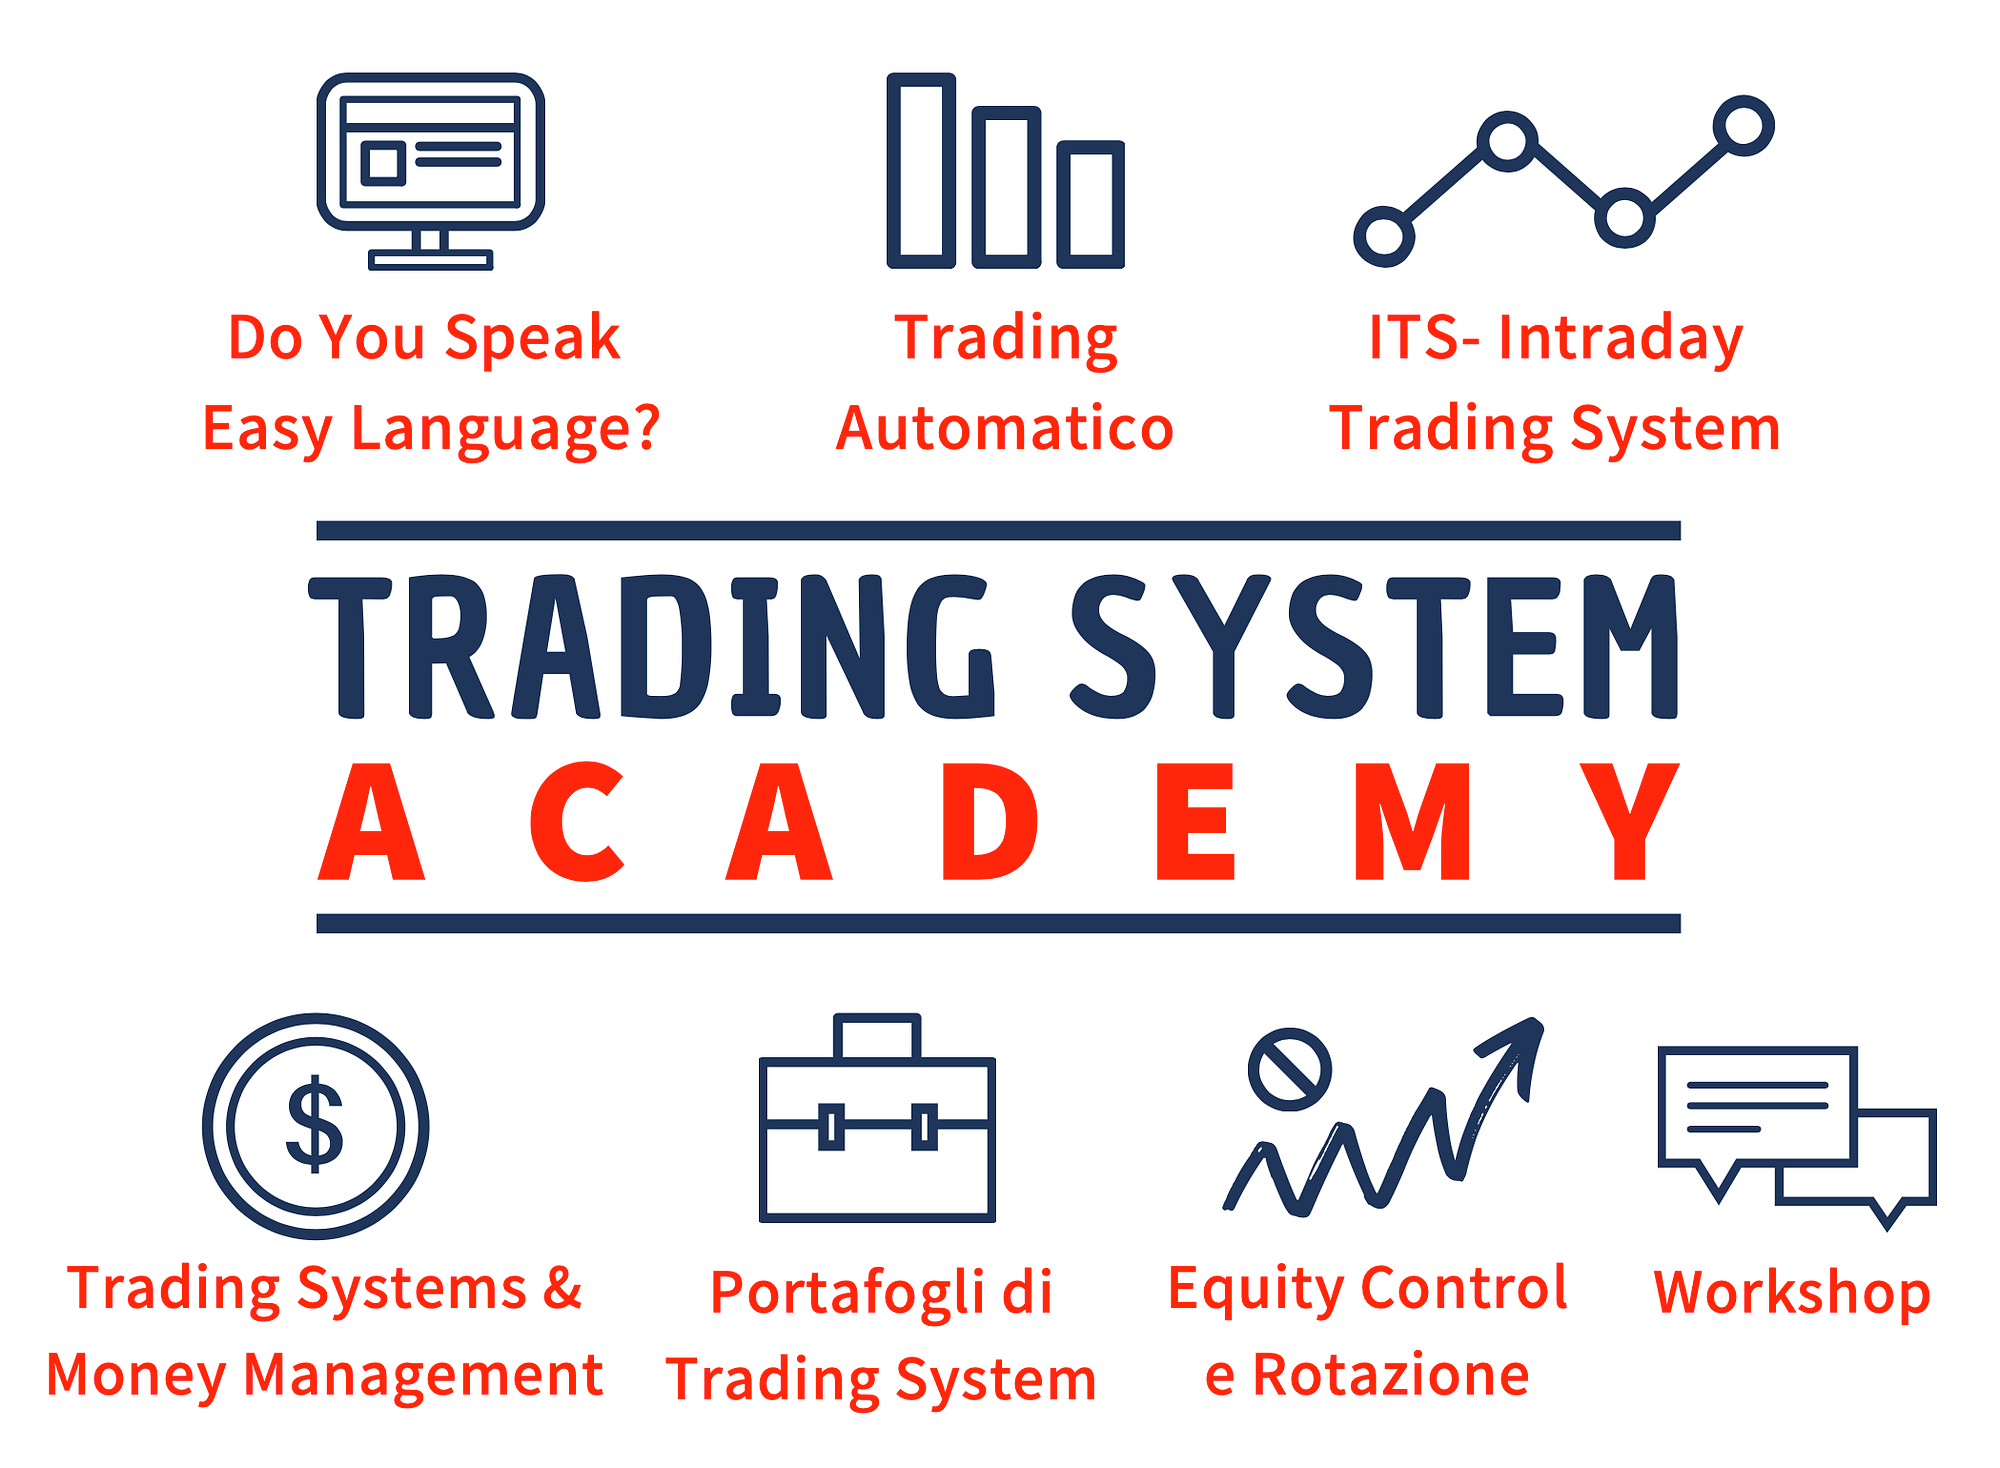 trading academy italia qtlab, approfondimento e analisi market slippage trading e commissioni futures